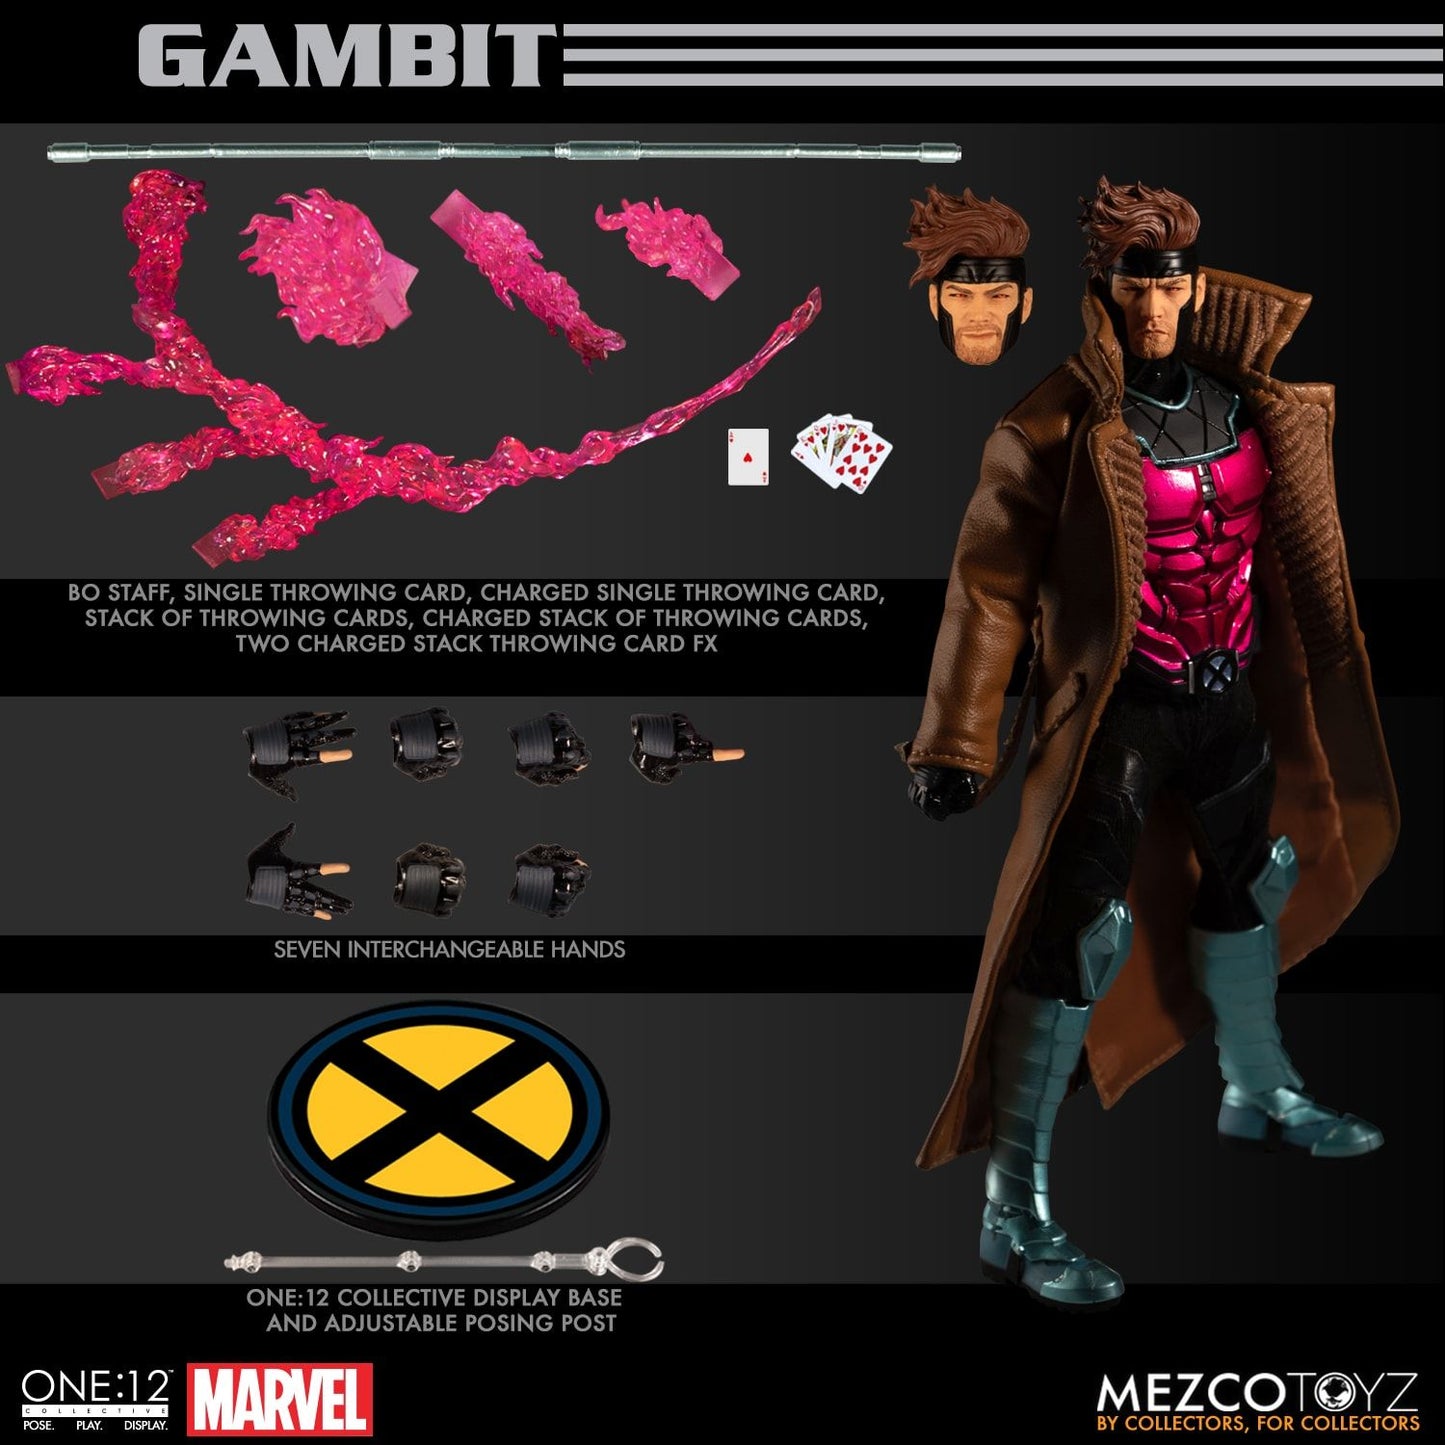 PRE-ORDER Mezco Toyz One:12 Collective Gambit Action Figure